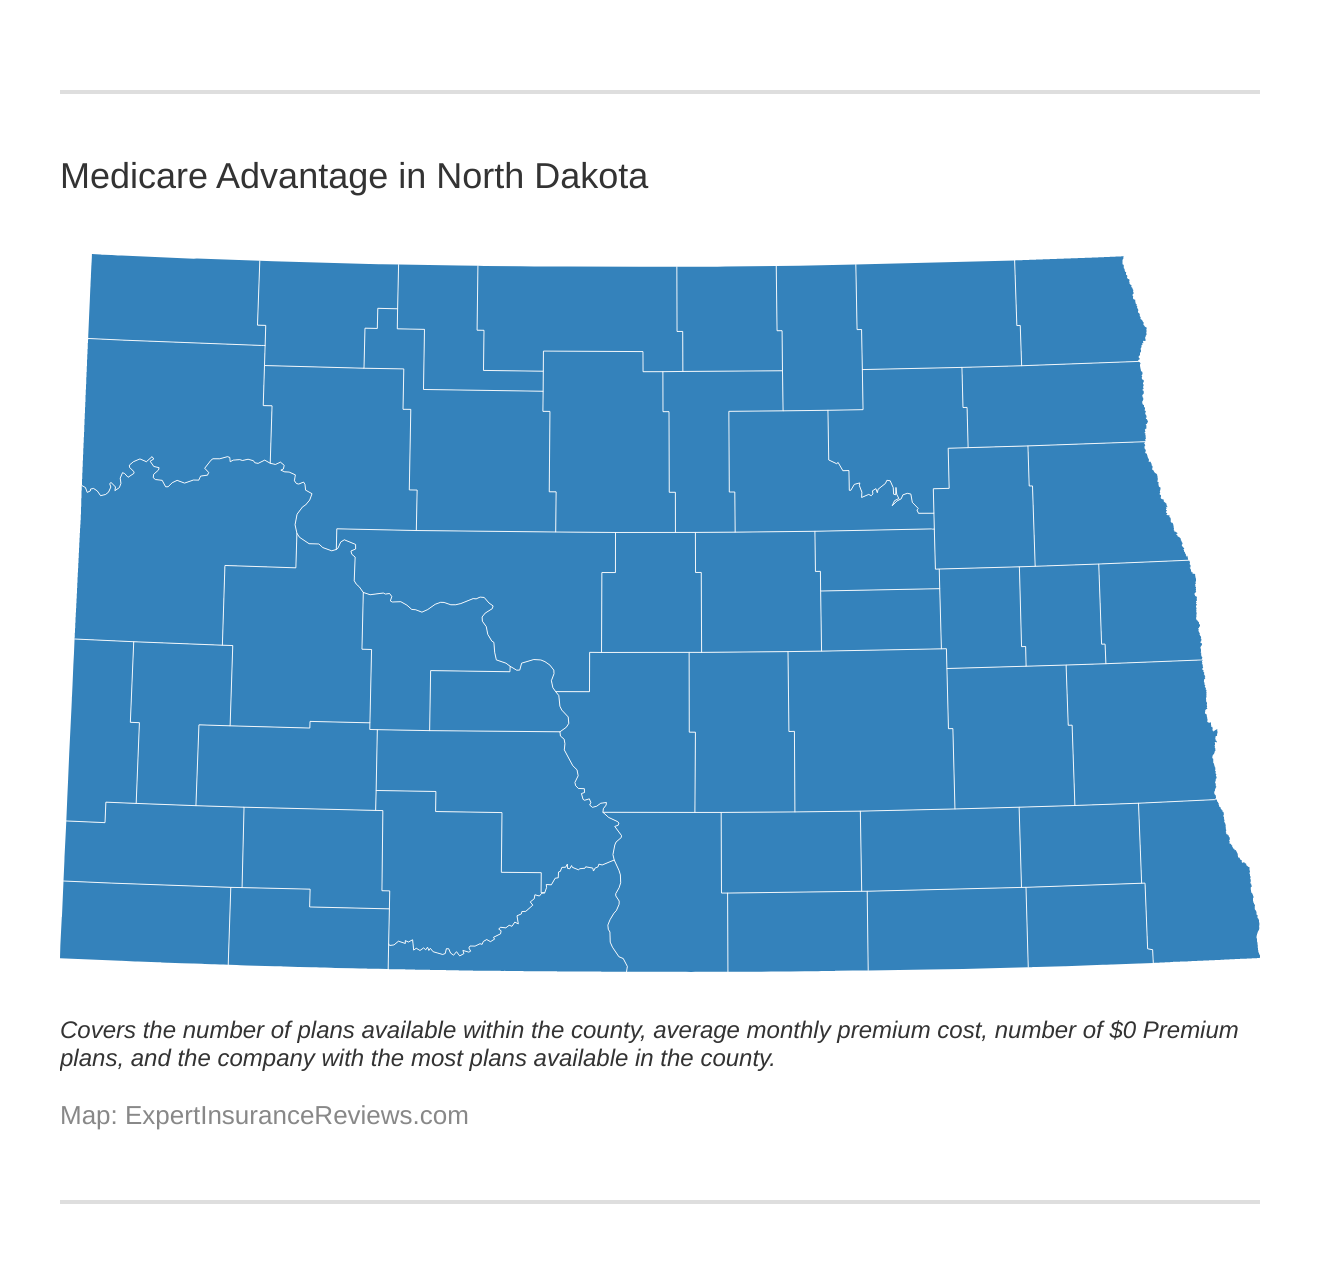 Medicare Advantage in North Dakota